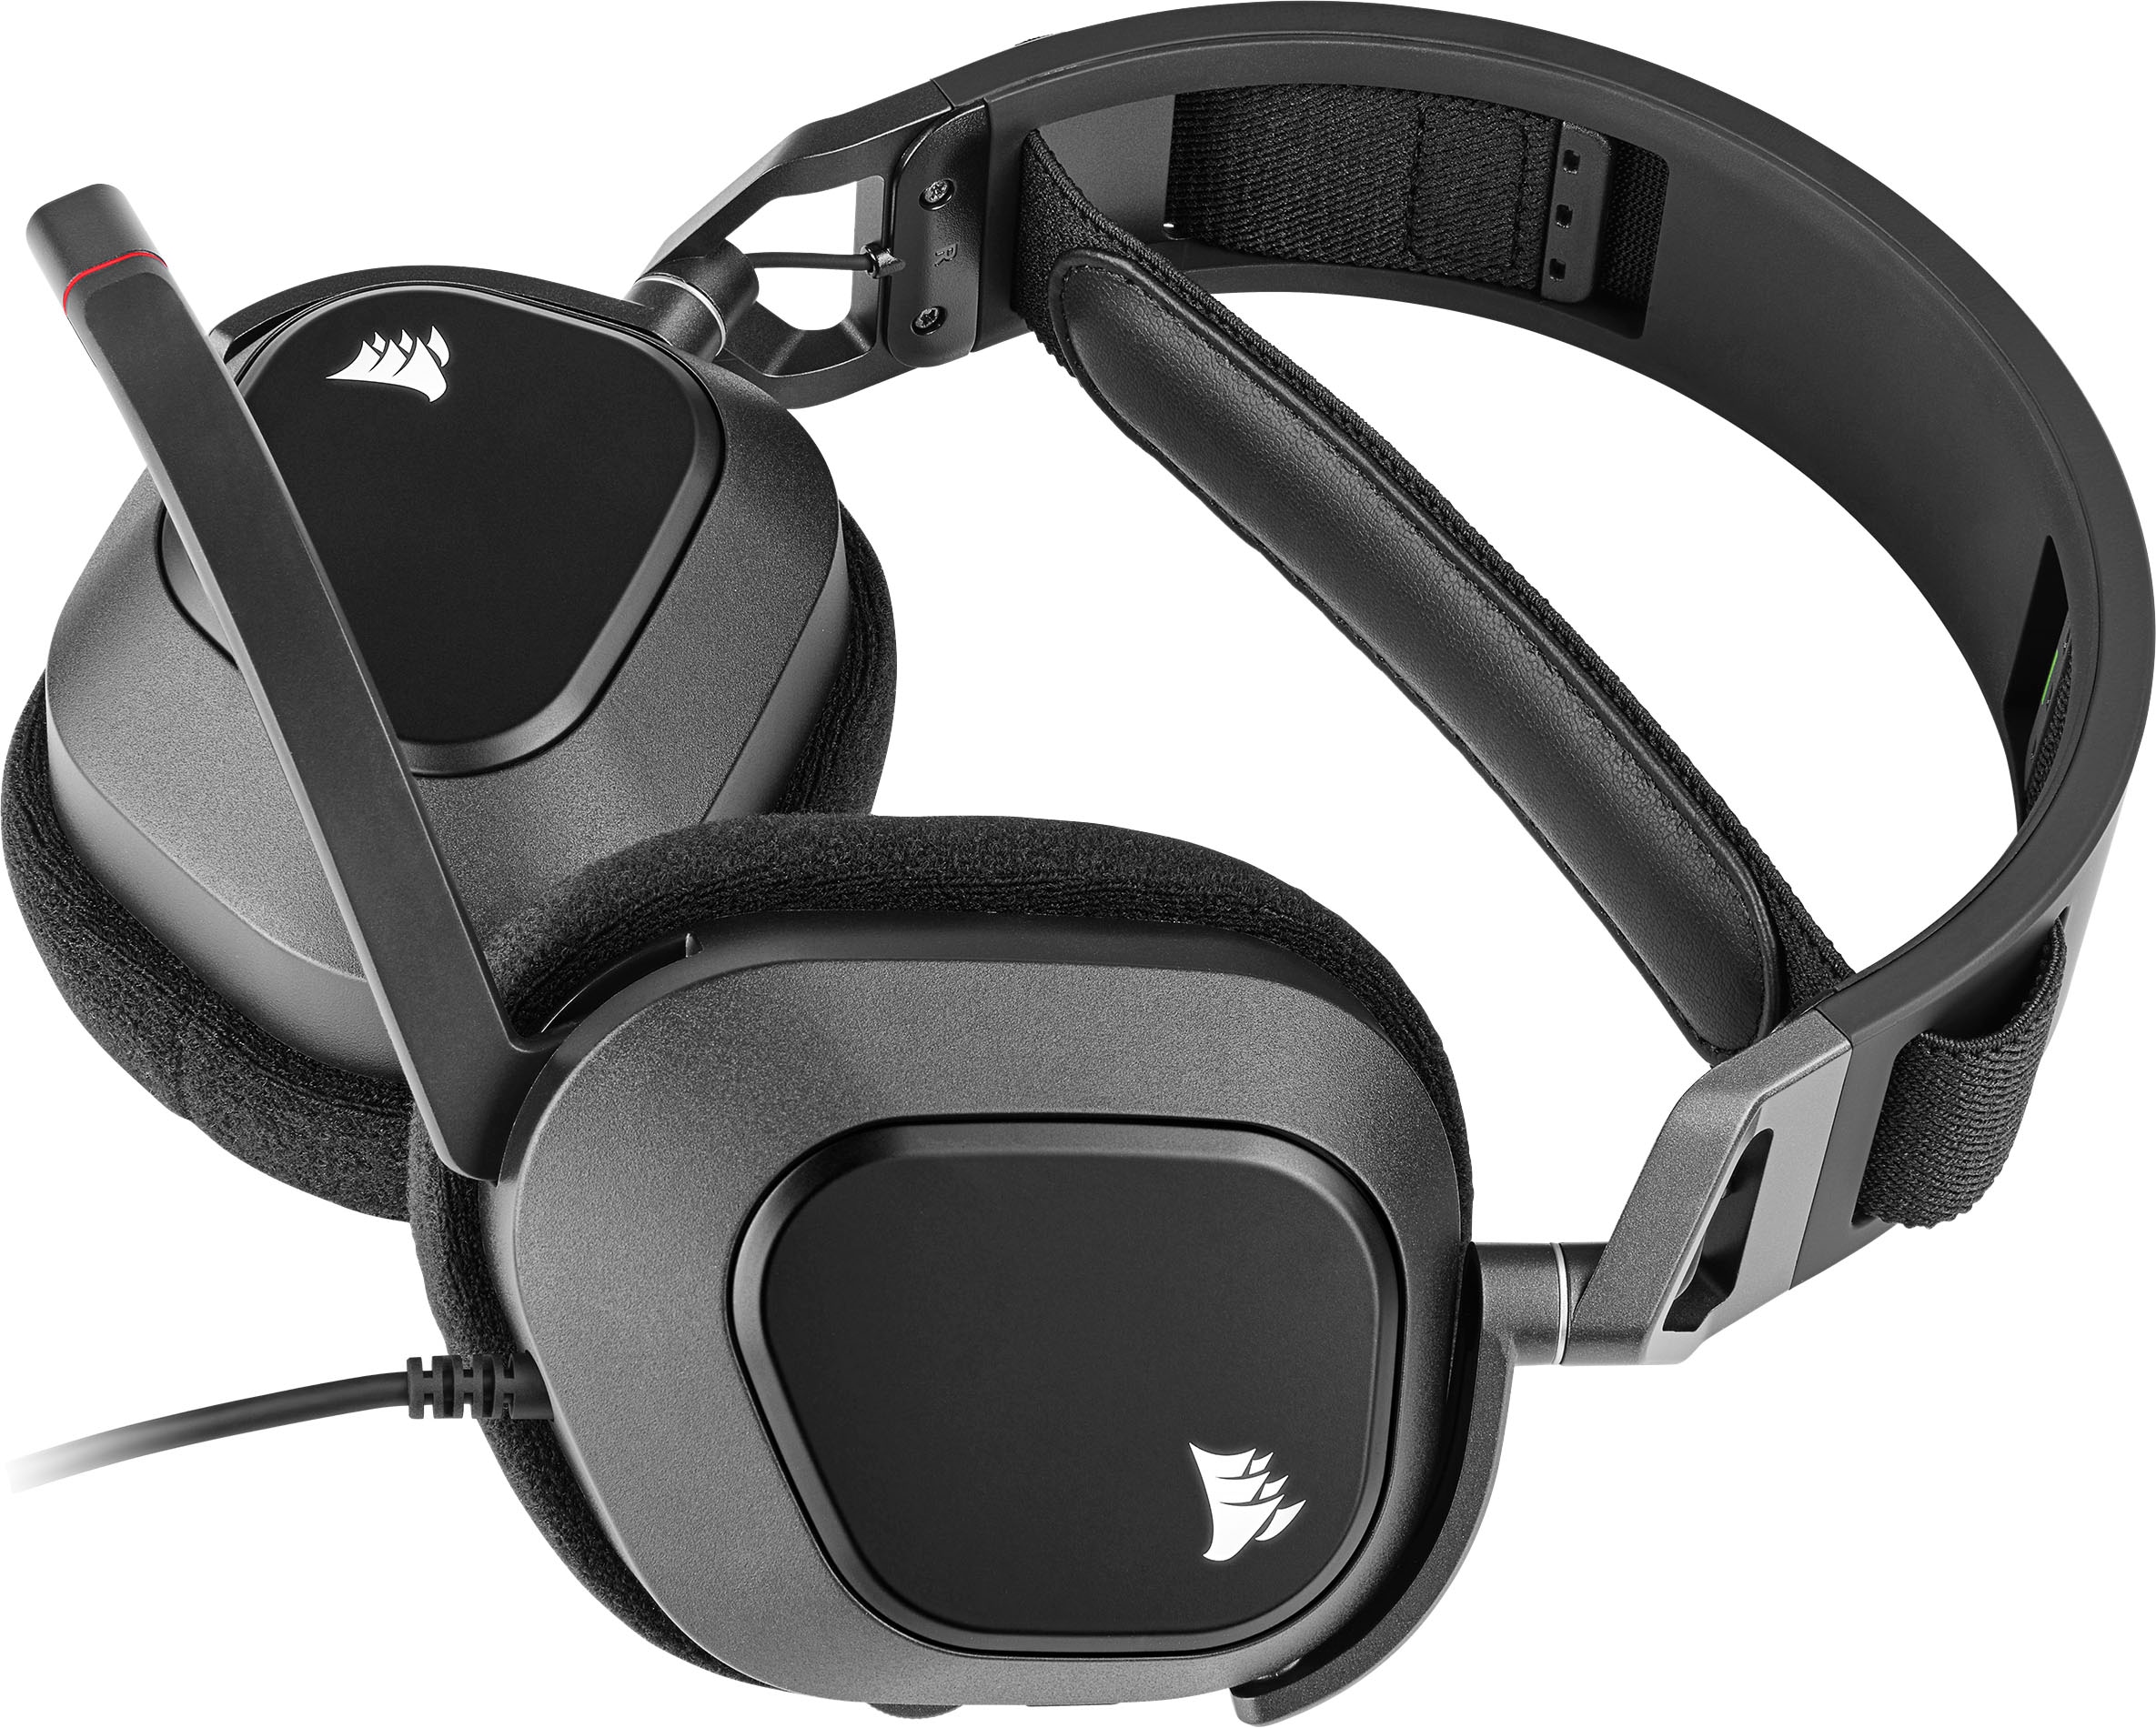 Corsair Gaming-Headset »HS80« Premium SURROUND...